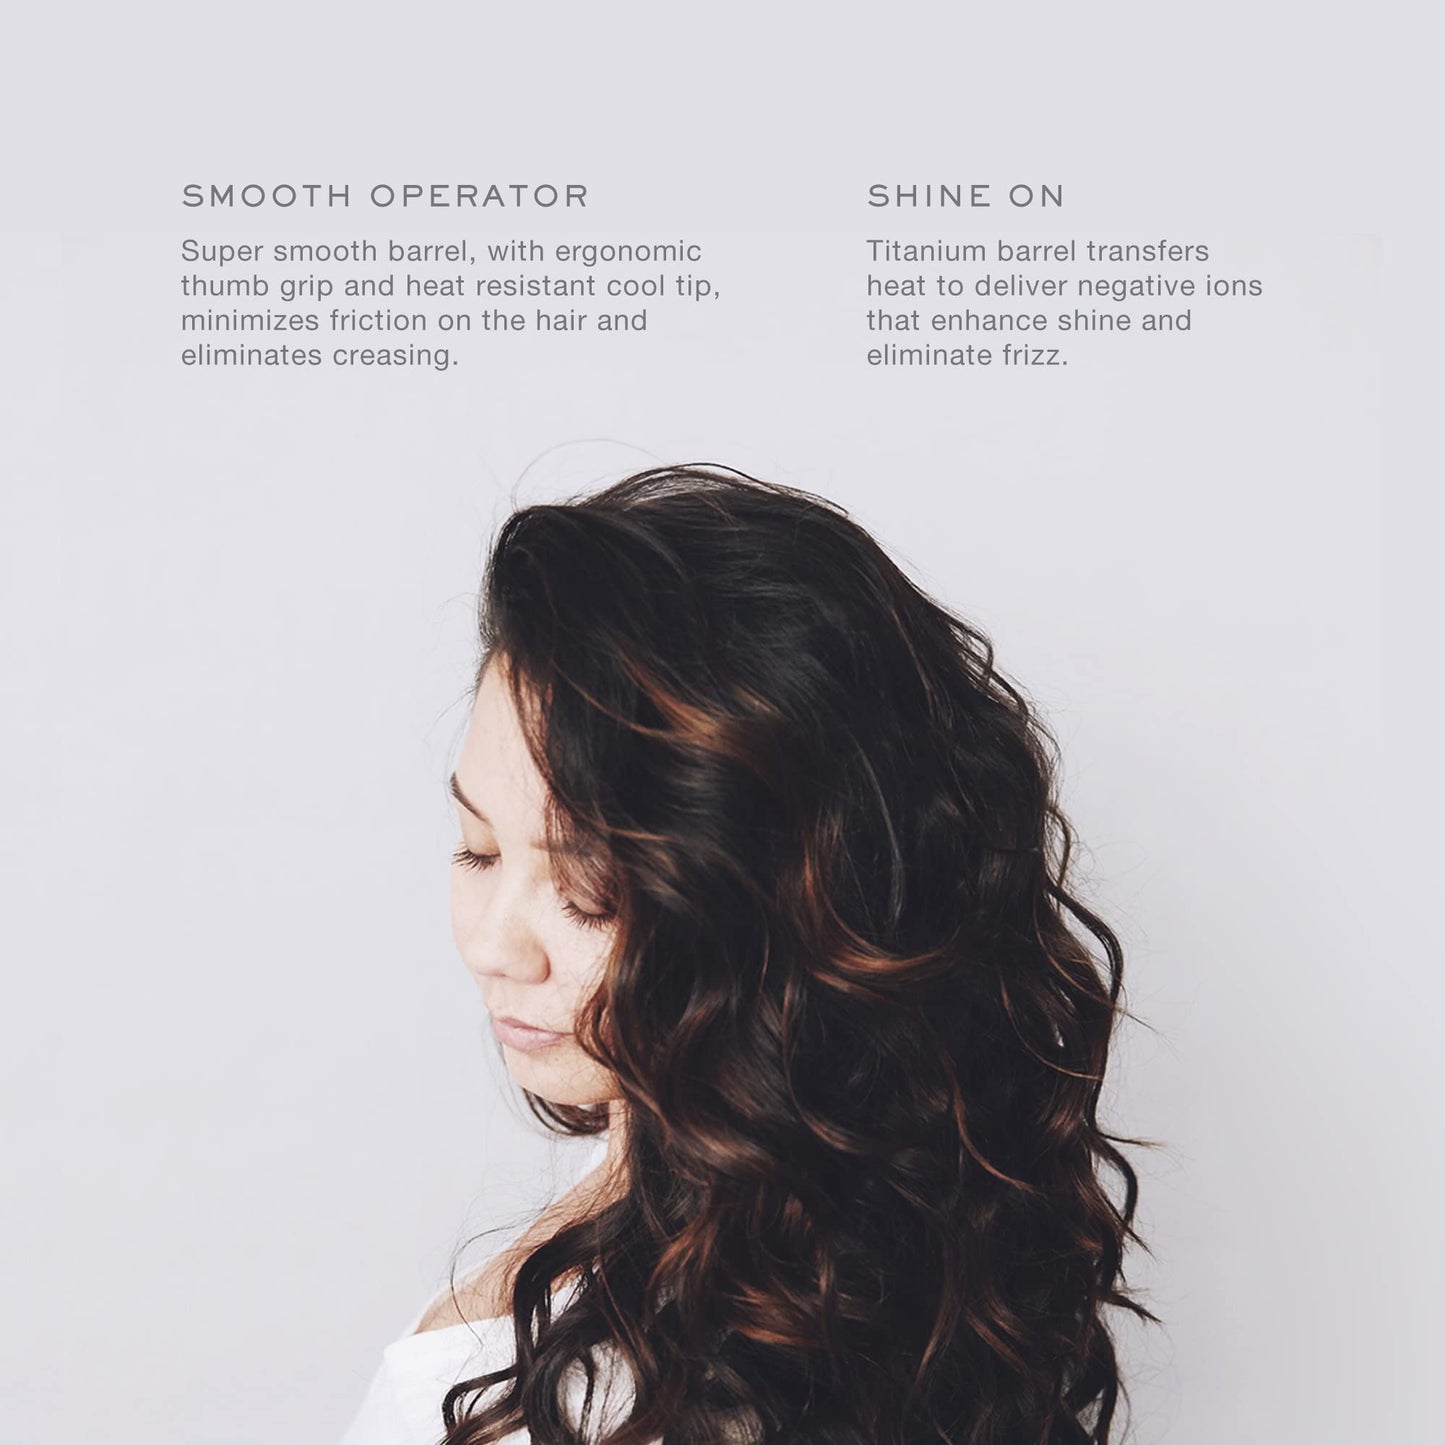 Kristin Ess Titanium Curling Iron for Beach Waves &amp; Curls for Medium to Long Hair - 1 1/4\"